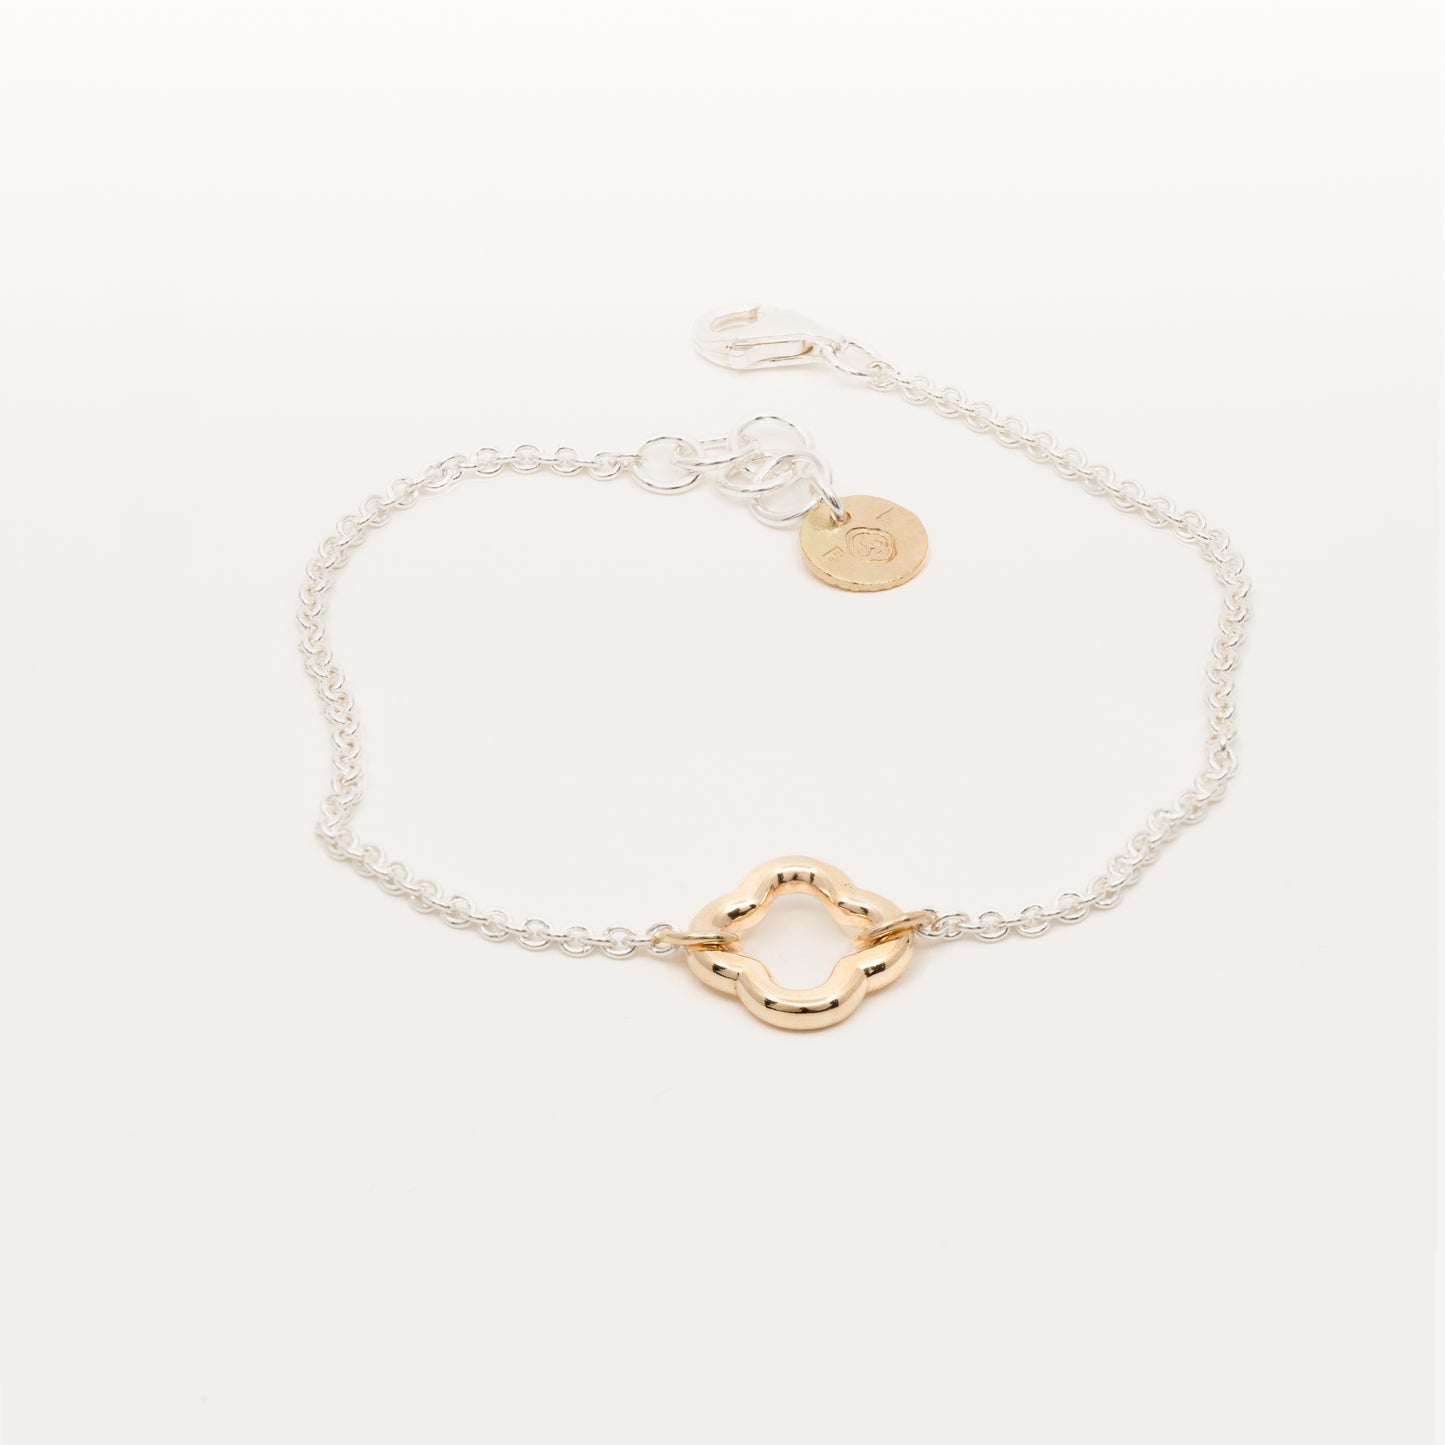 Creo Plain - Silver/Gold bracelet